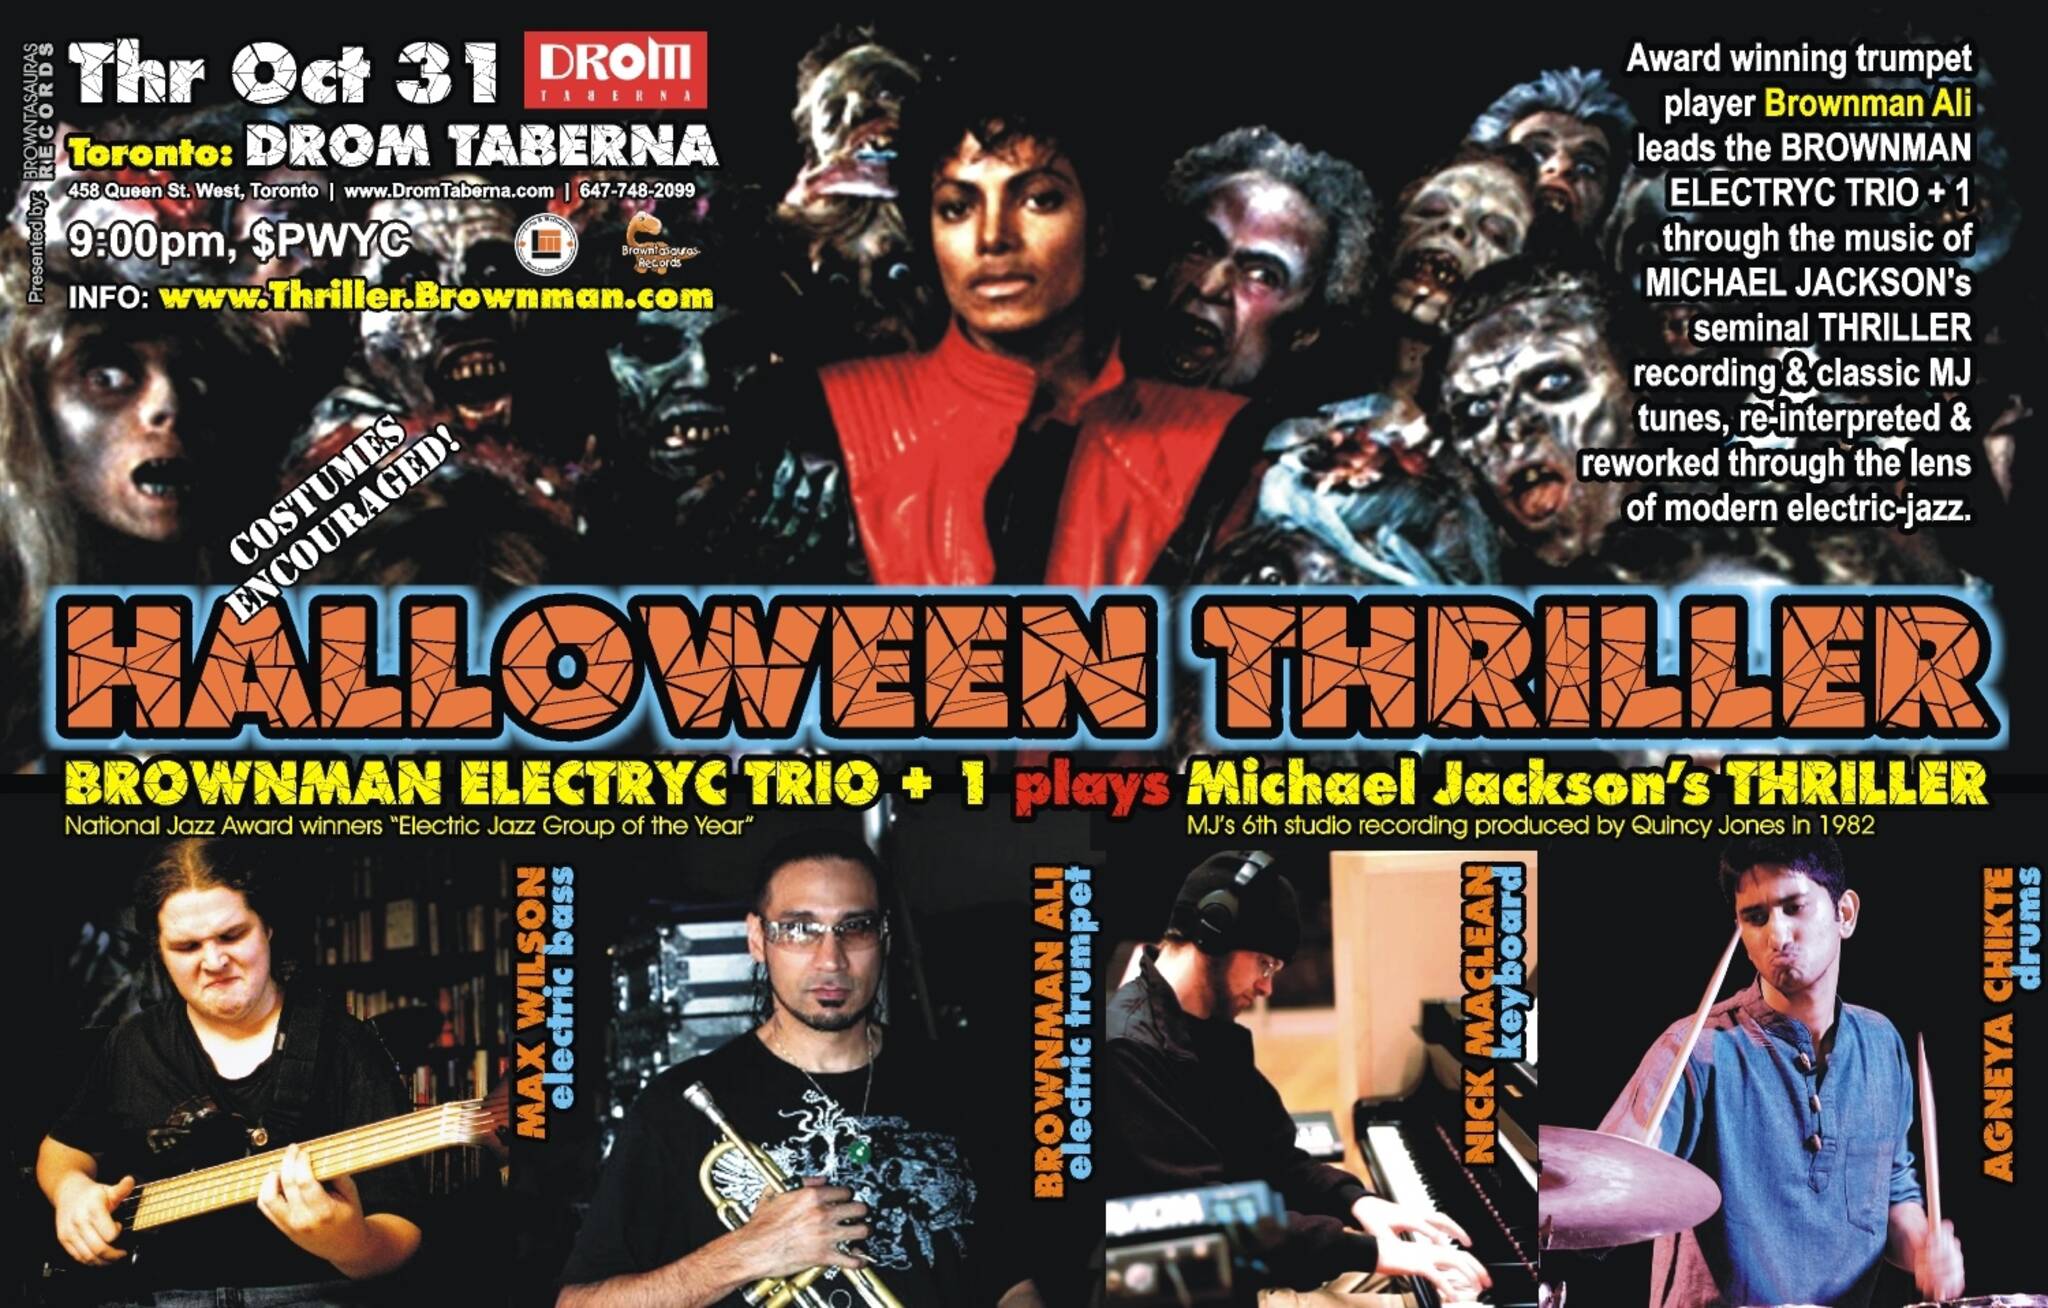 Brownman's Halloween Thriller, MJ as electric jazz, 9pm, $PWYC